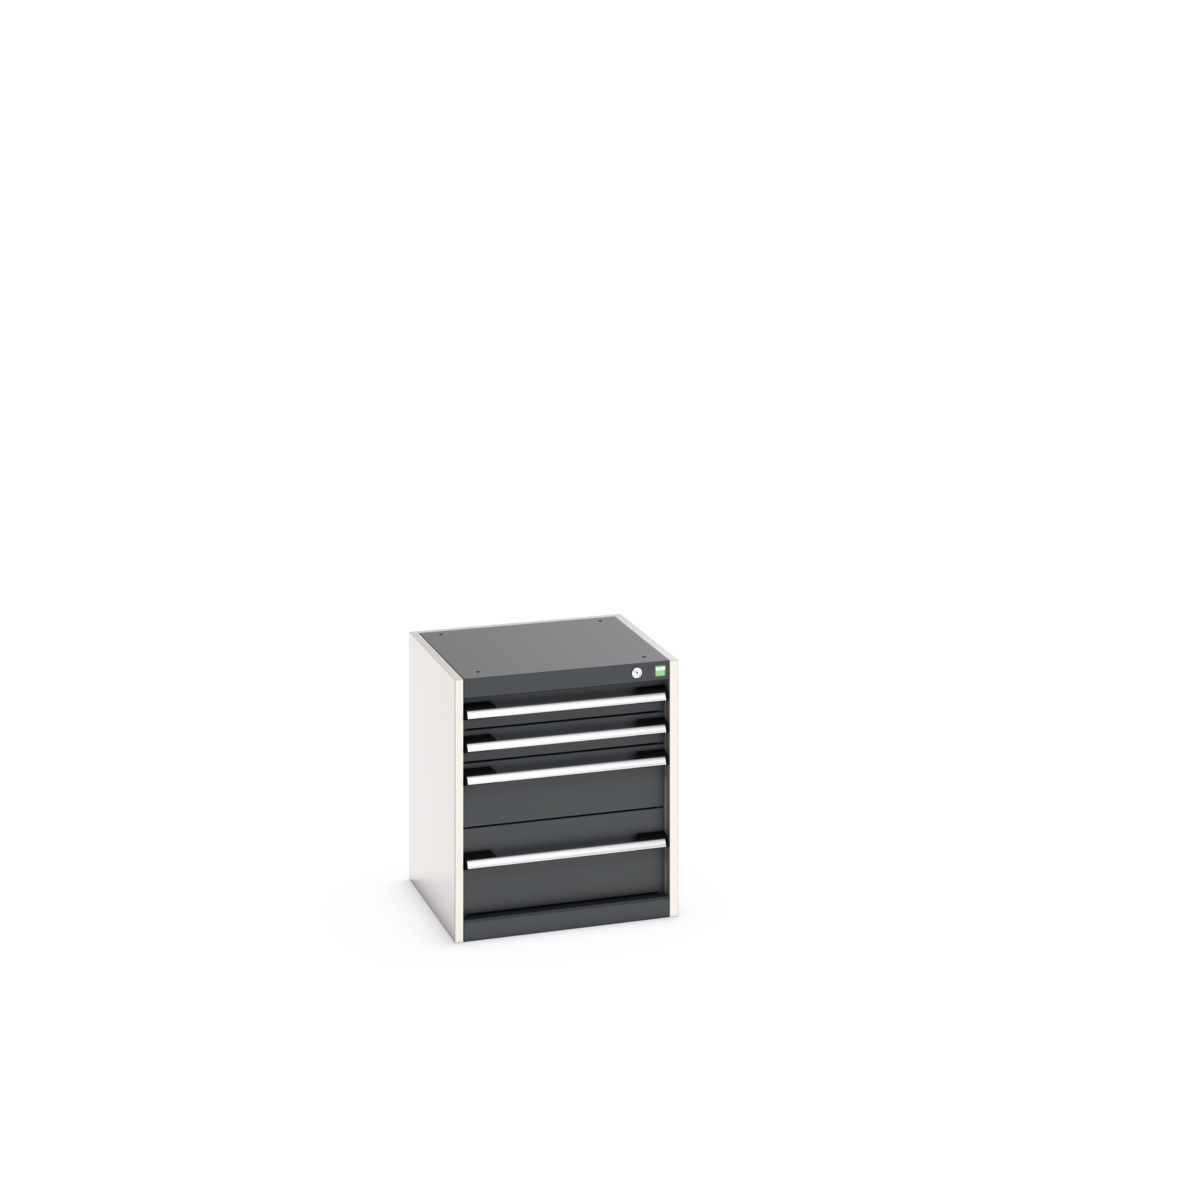 40010112. - cubio drawer cabinet